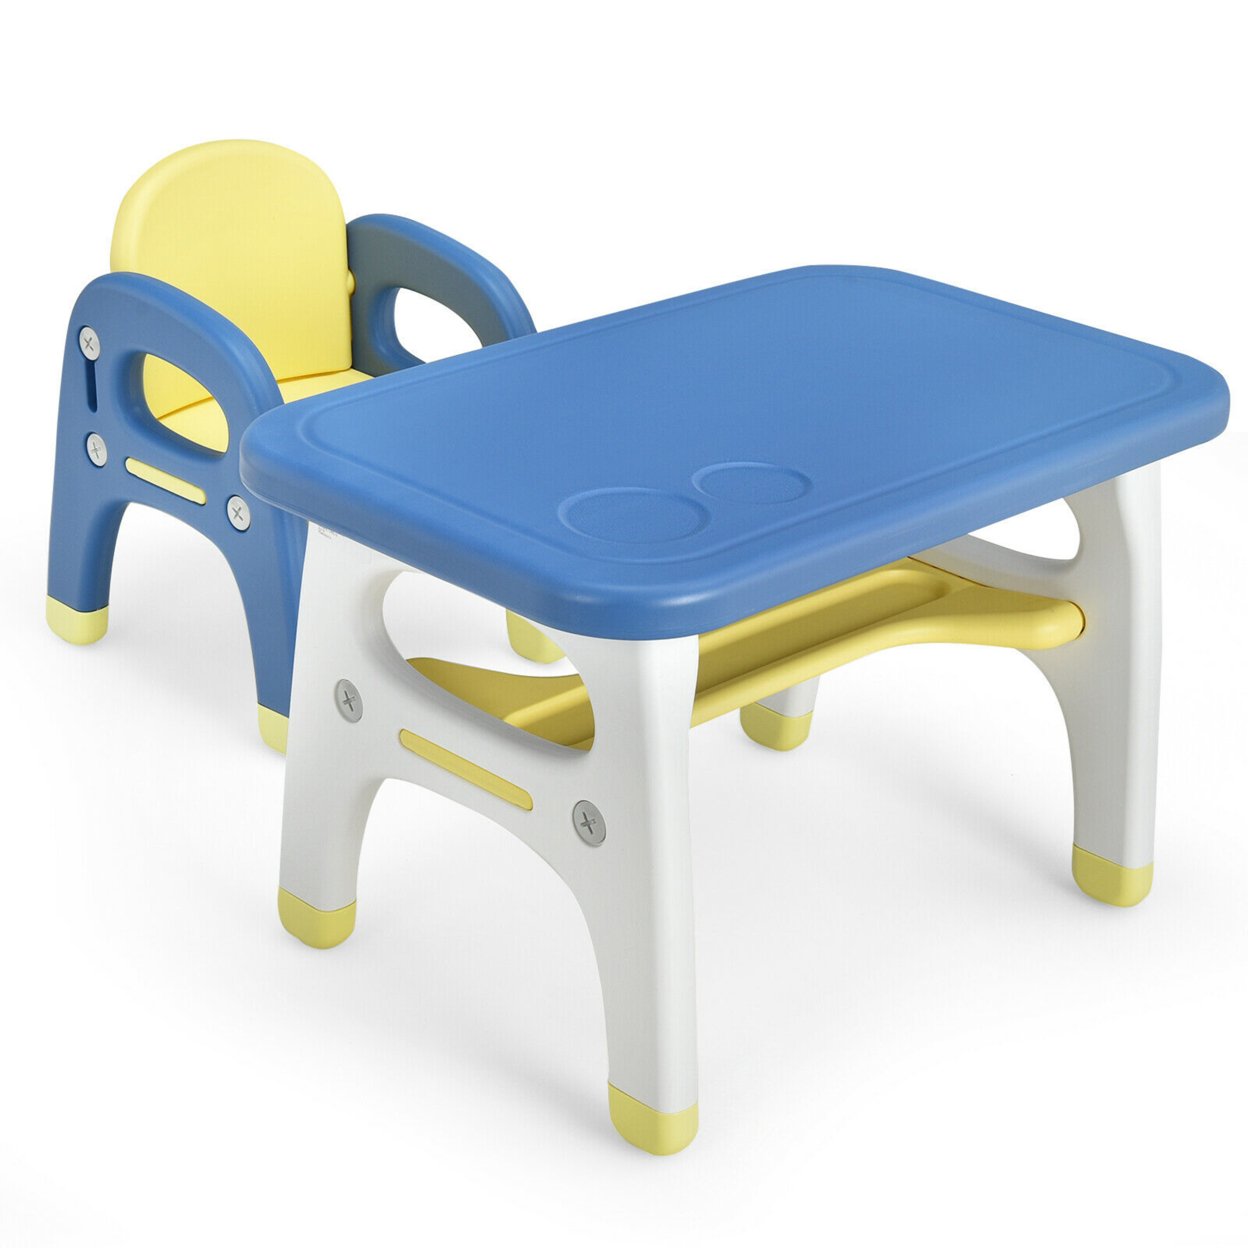 Kids Dinosaur Table And Chair Set Activity Study Desk W/ Building Blocks